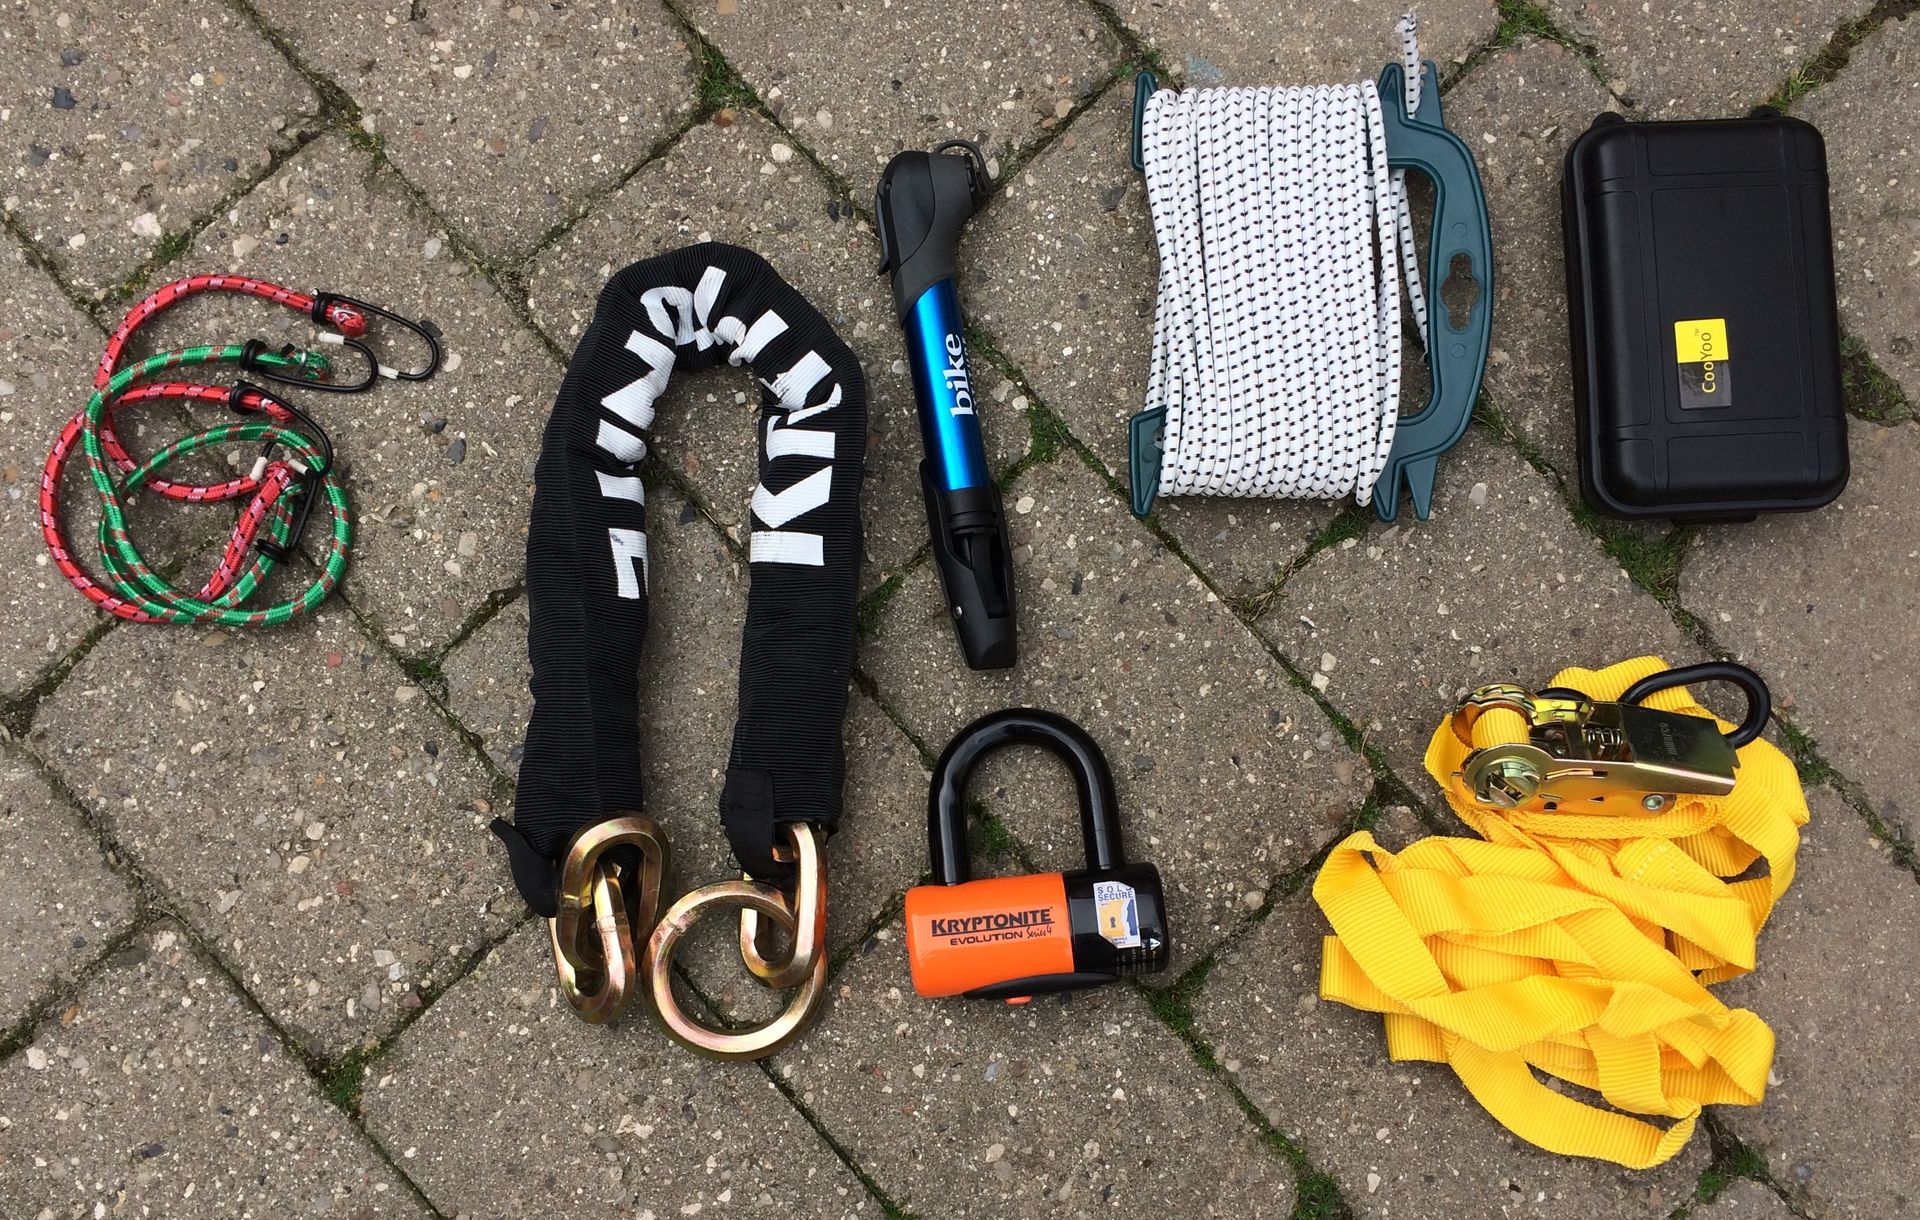 PANEL BAGS Taschen Bullitt | FAHRER Berlin - der Fahrradzubehör Hersteller